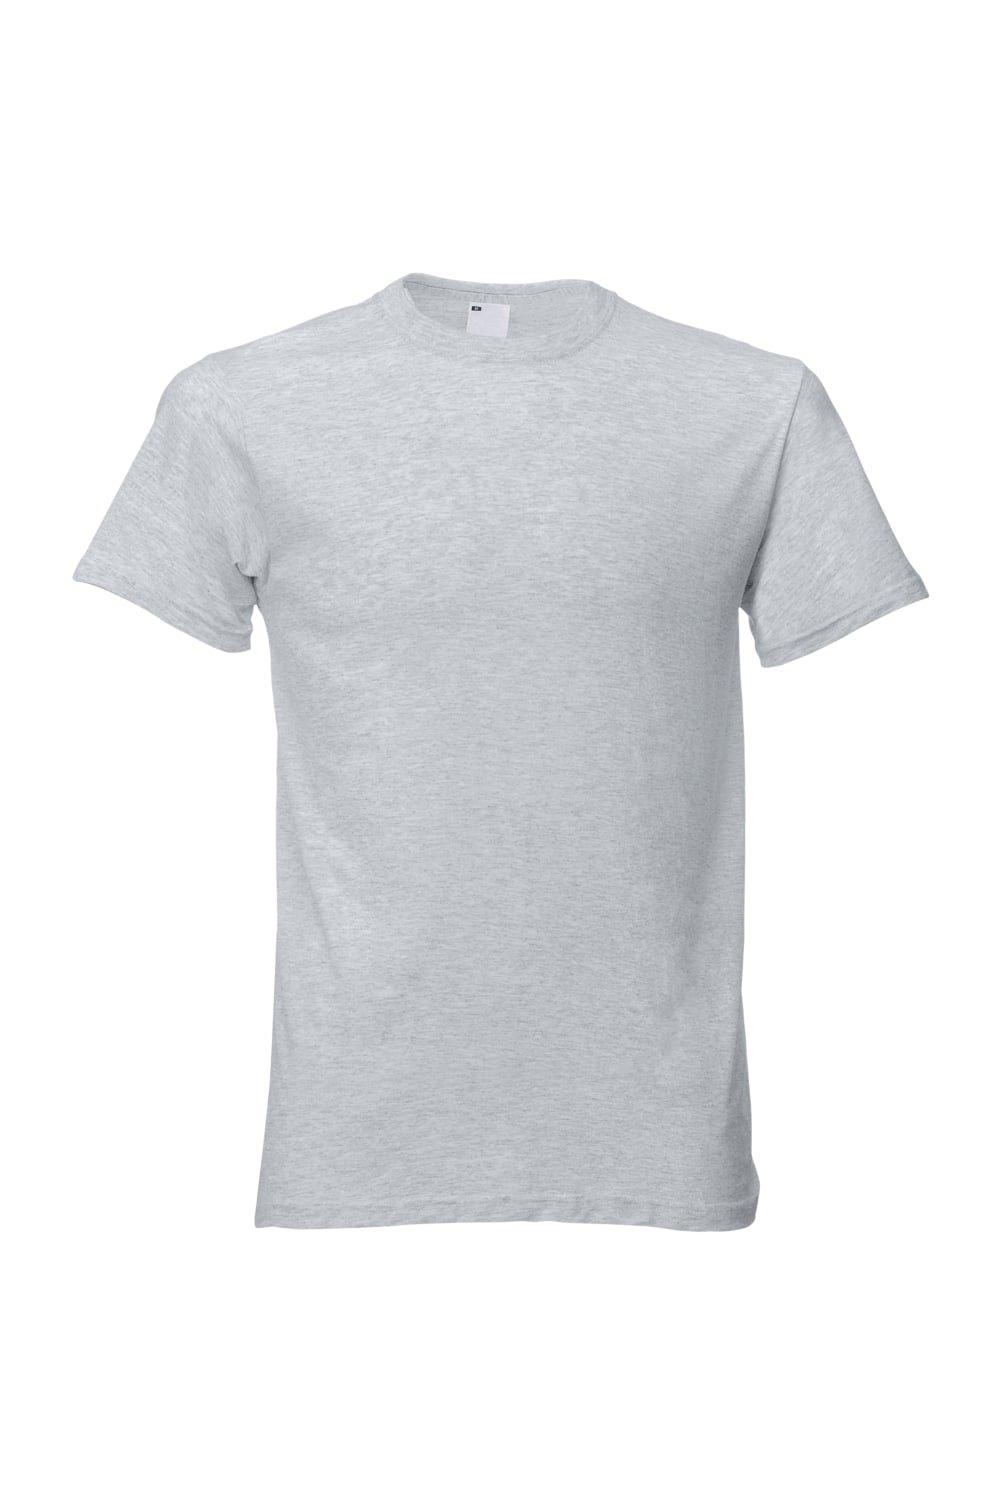 Повседневная футболка с коротким рукавом Universal Textiles, серый мужская футболка ретро кассета 2xl серый меланж